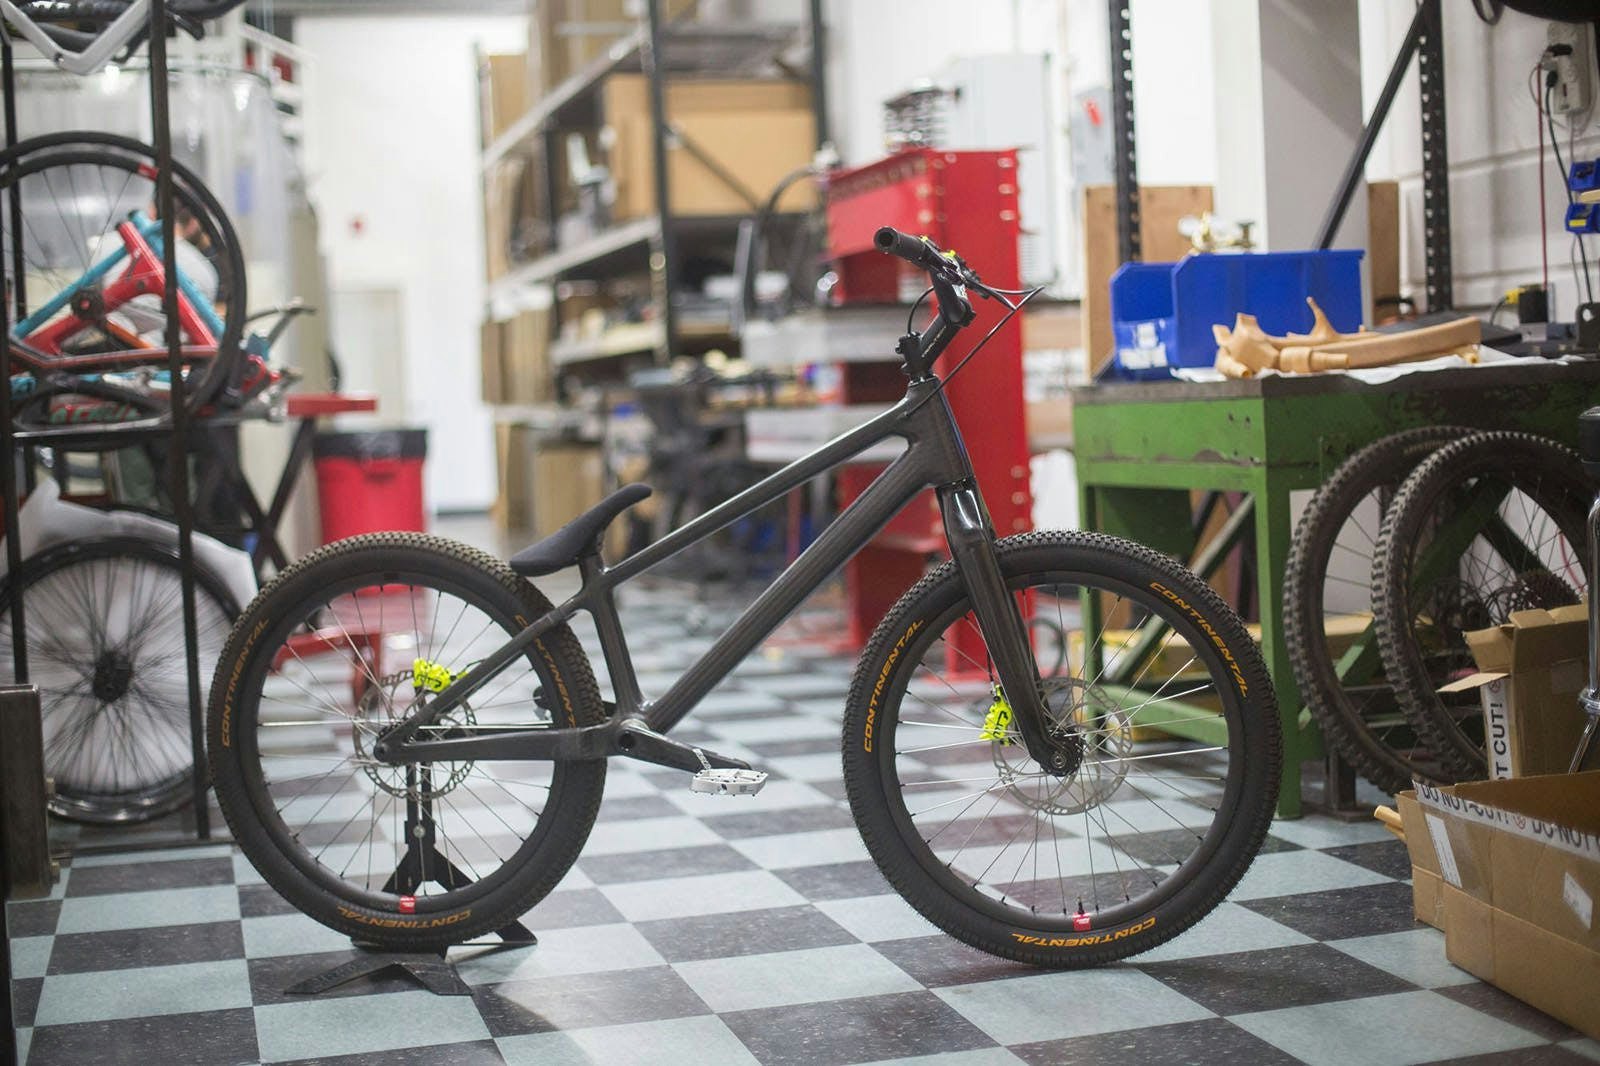 Danny Macaskill prototype Santa Cruz trials bike with 24" Reserve carbon wheels